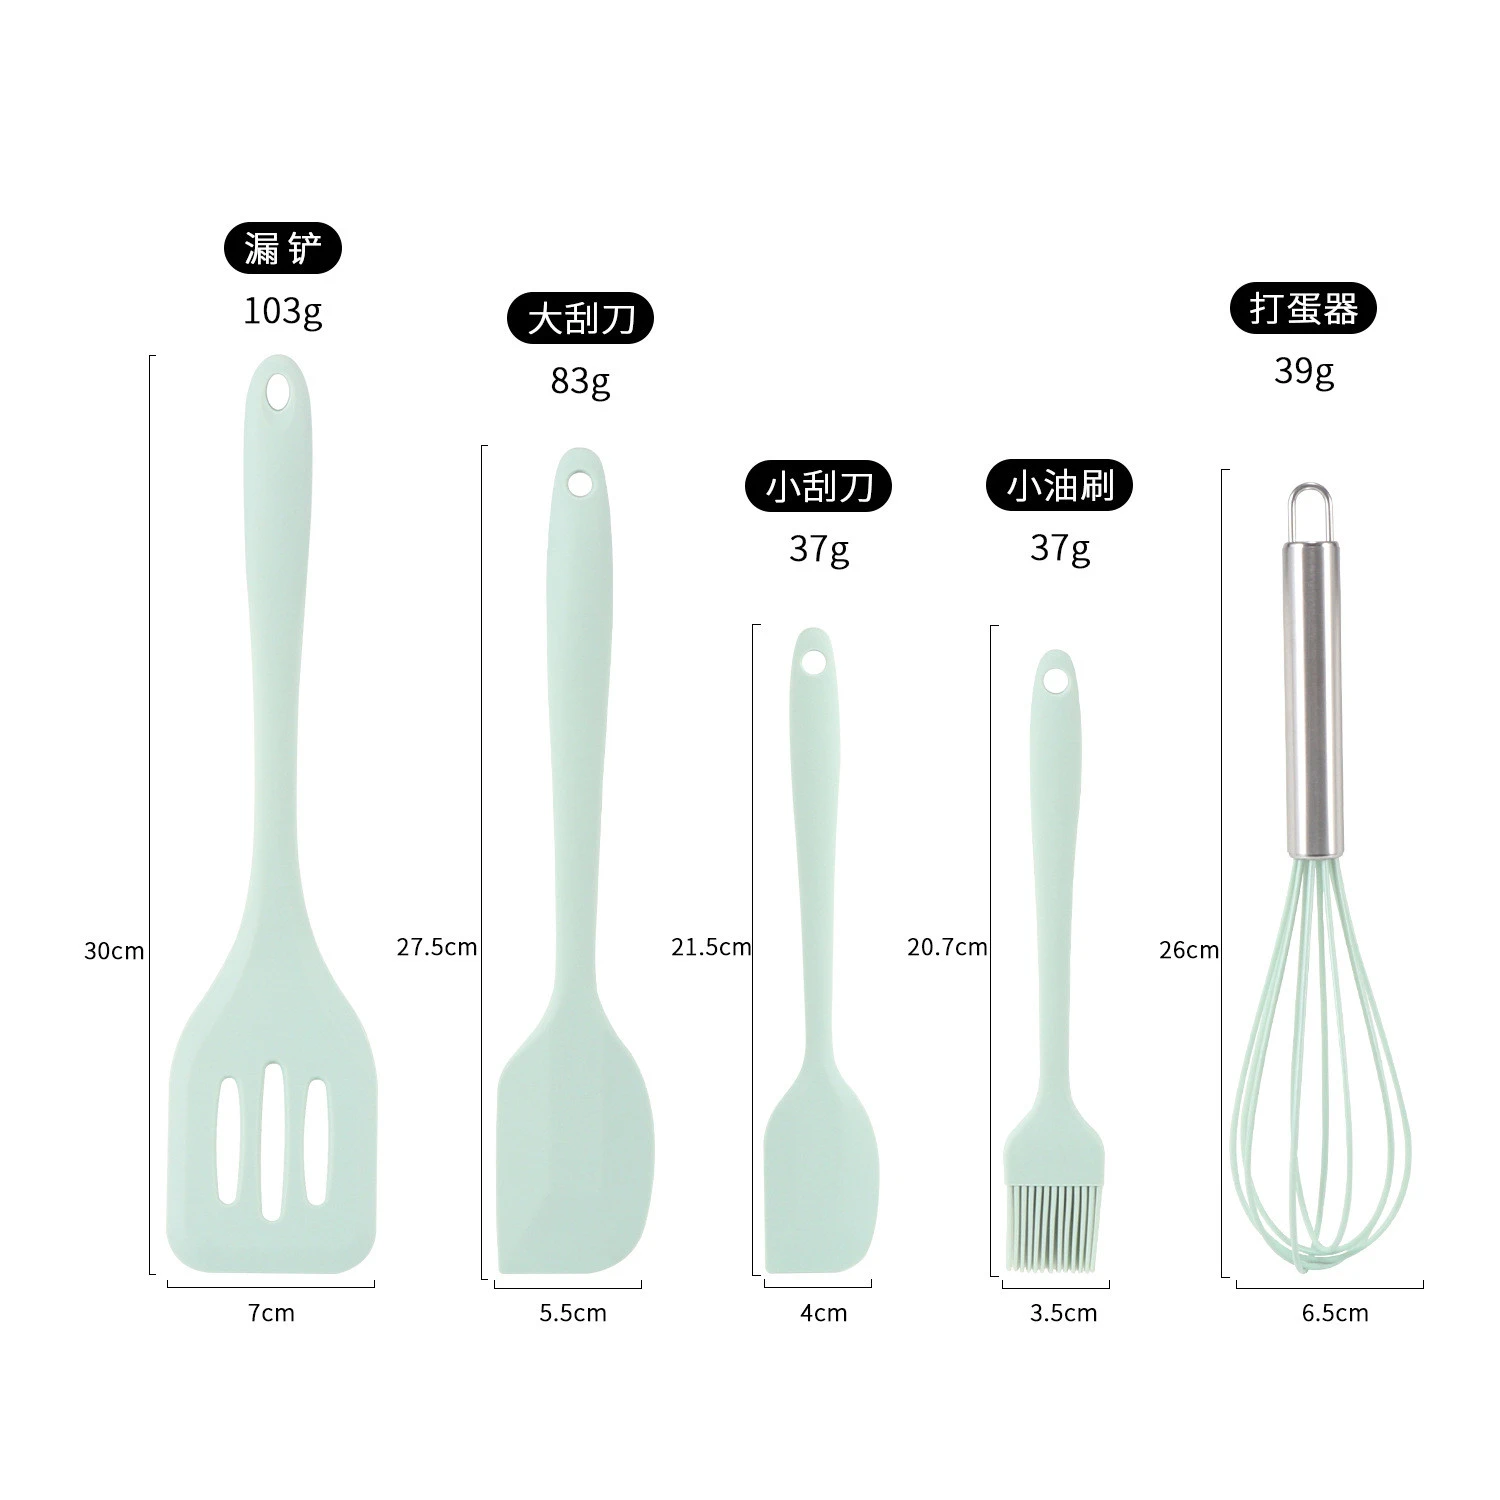 Silicone cooking utensils set household cooking spoon shovel kitchen tool set kitchen utensils